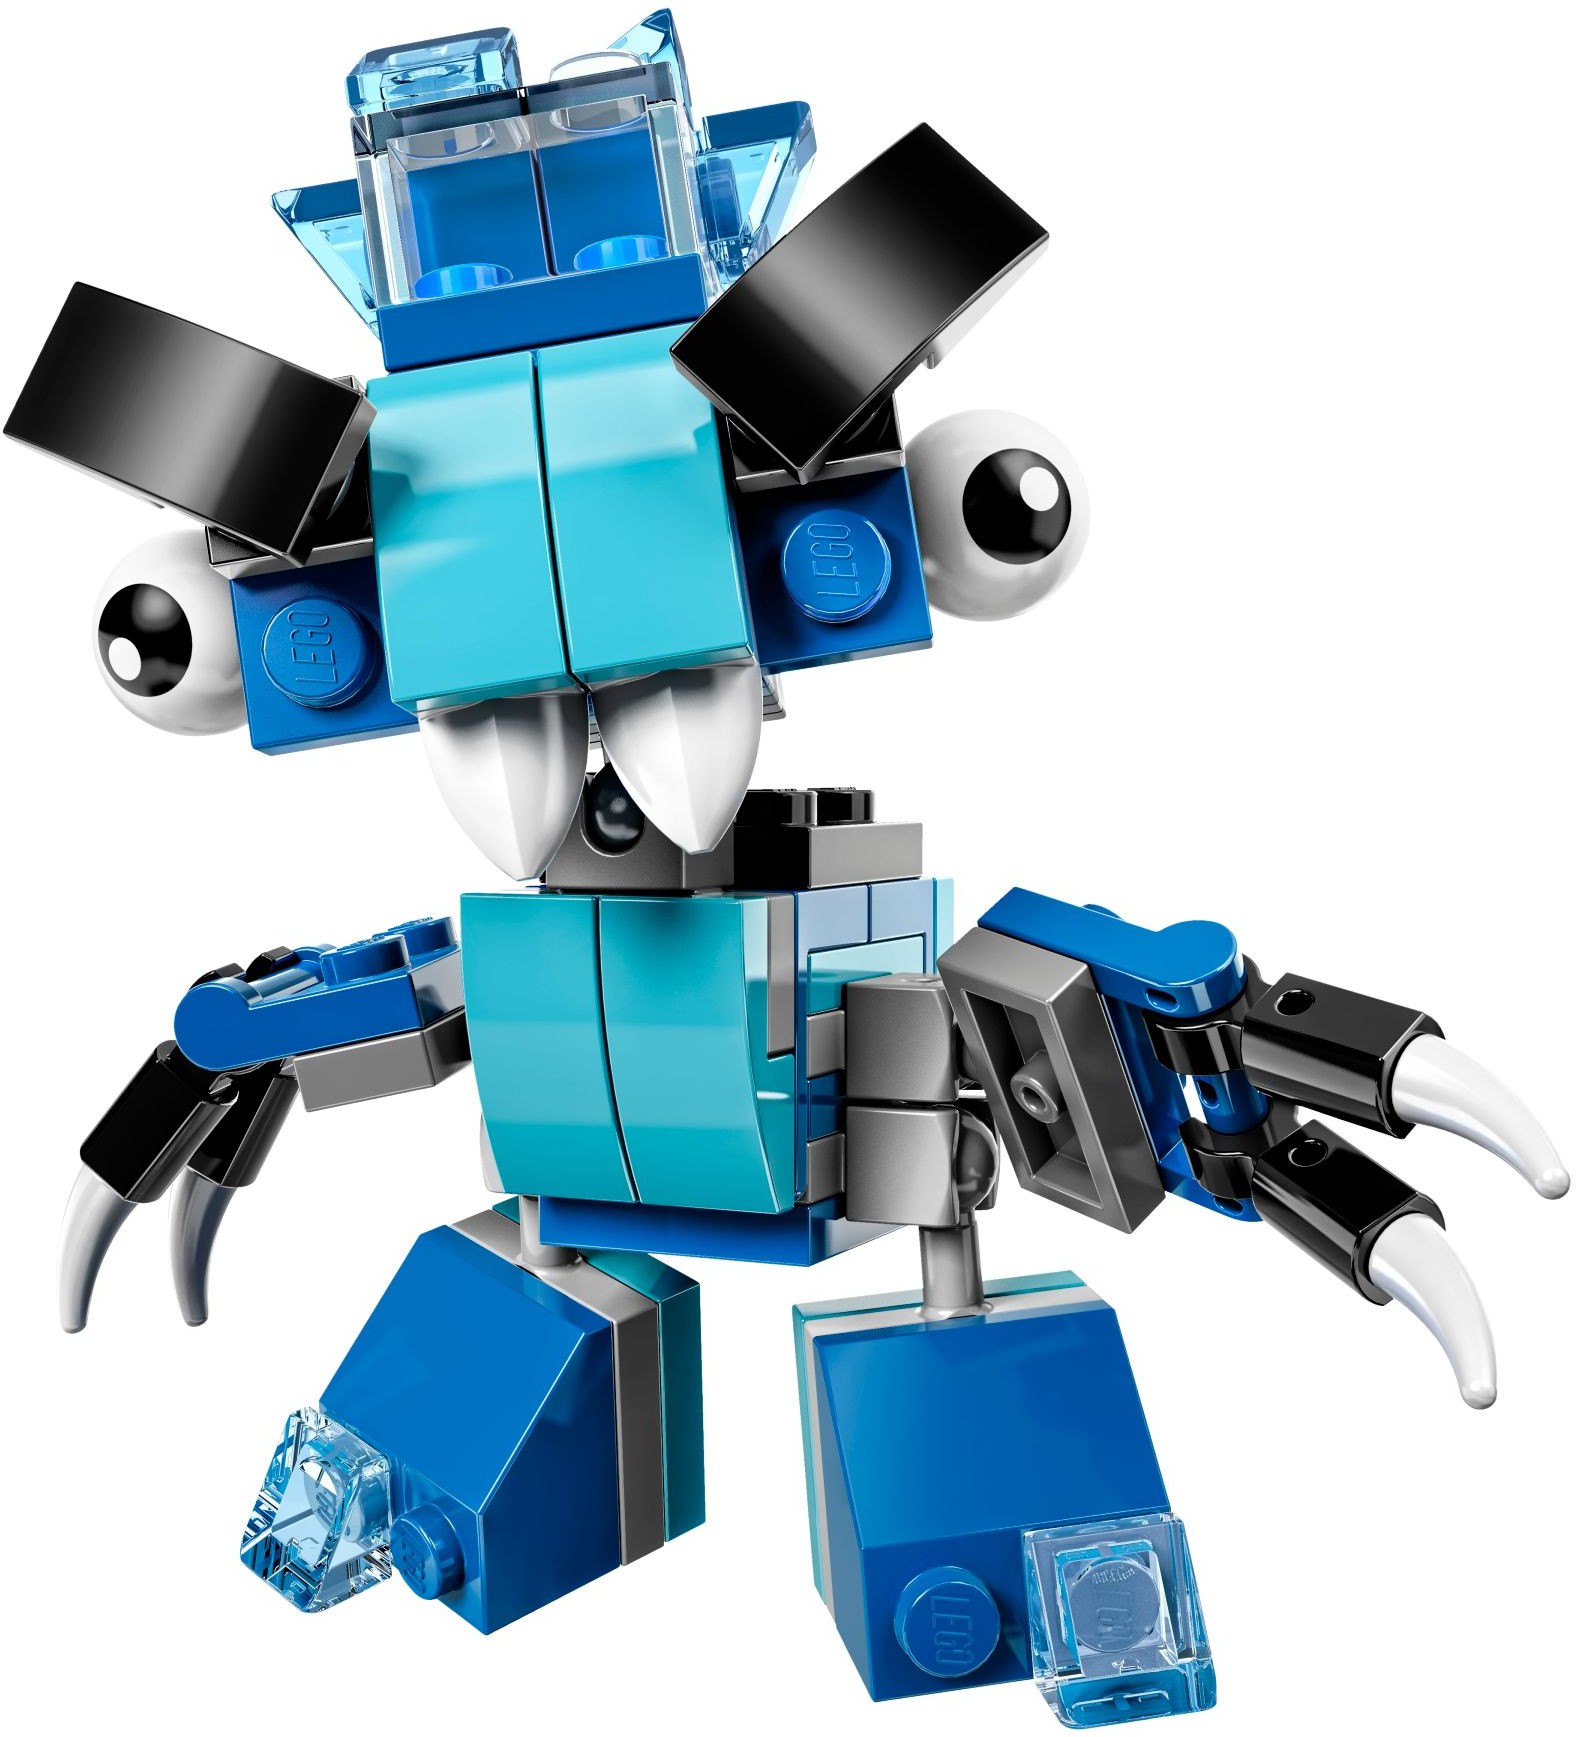 Lego Mixels Chilbo 6+ ani